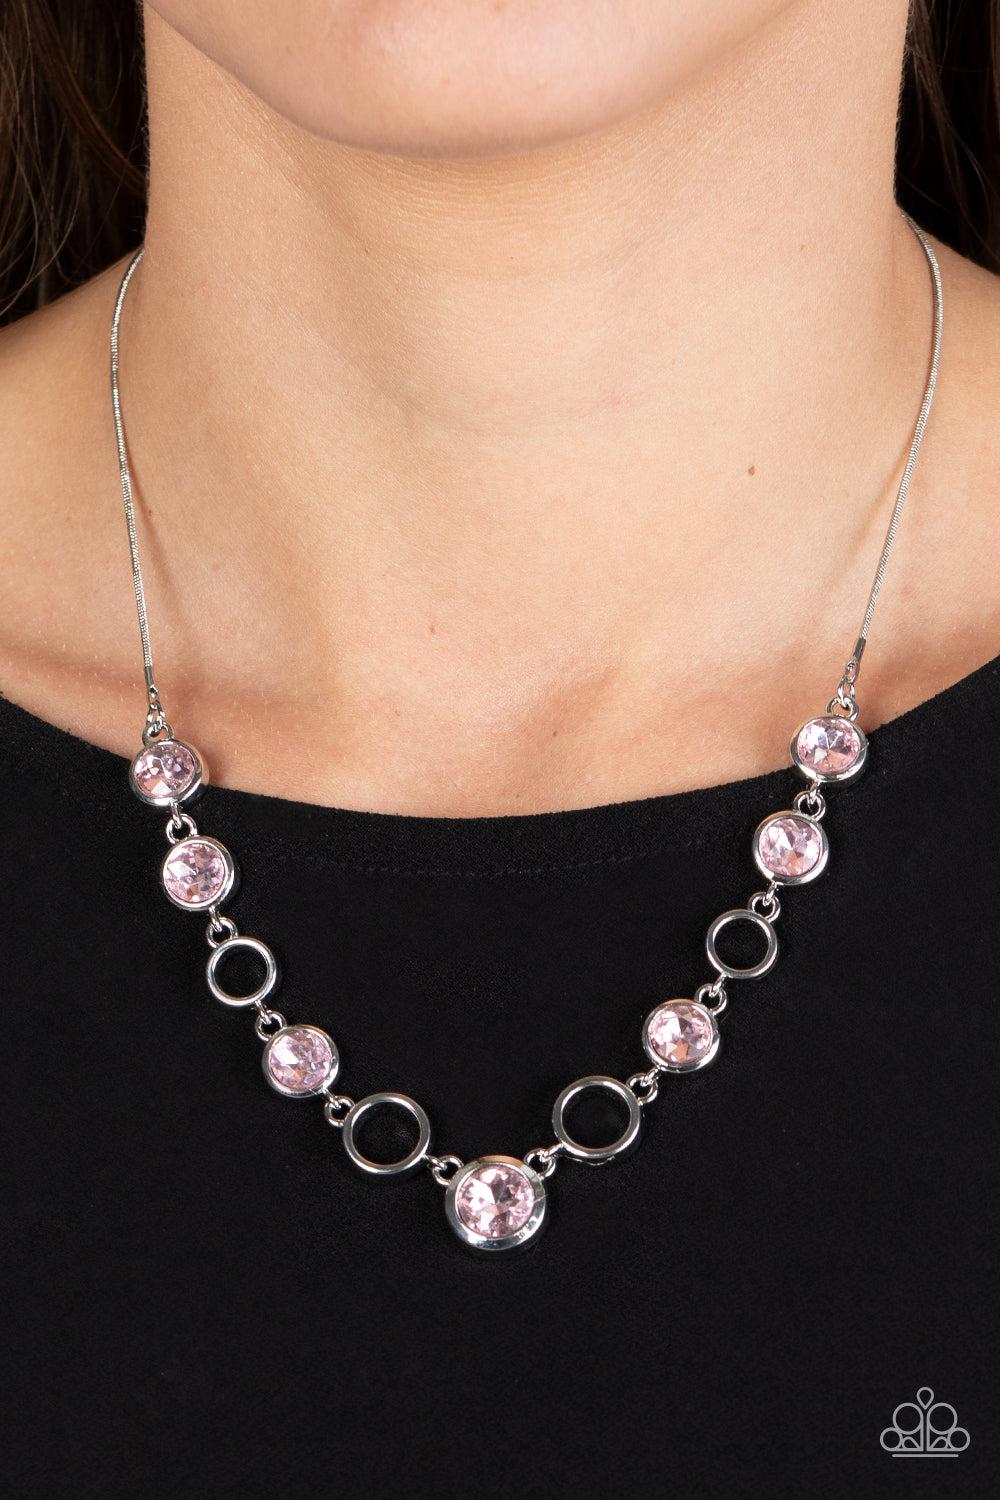 Elegantly Elite Pink Rhinestone Necklace - Paparazzi Accessories-on model - CarasShop.com - $5 Jewelry by Cara Jewels